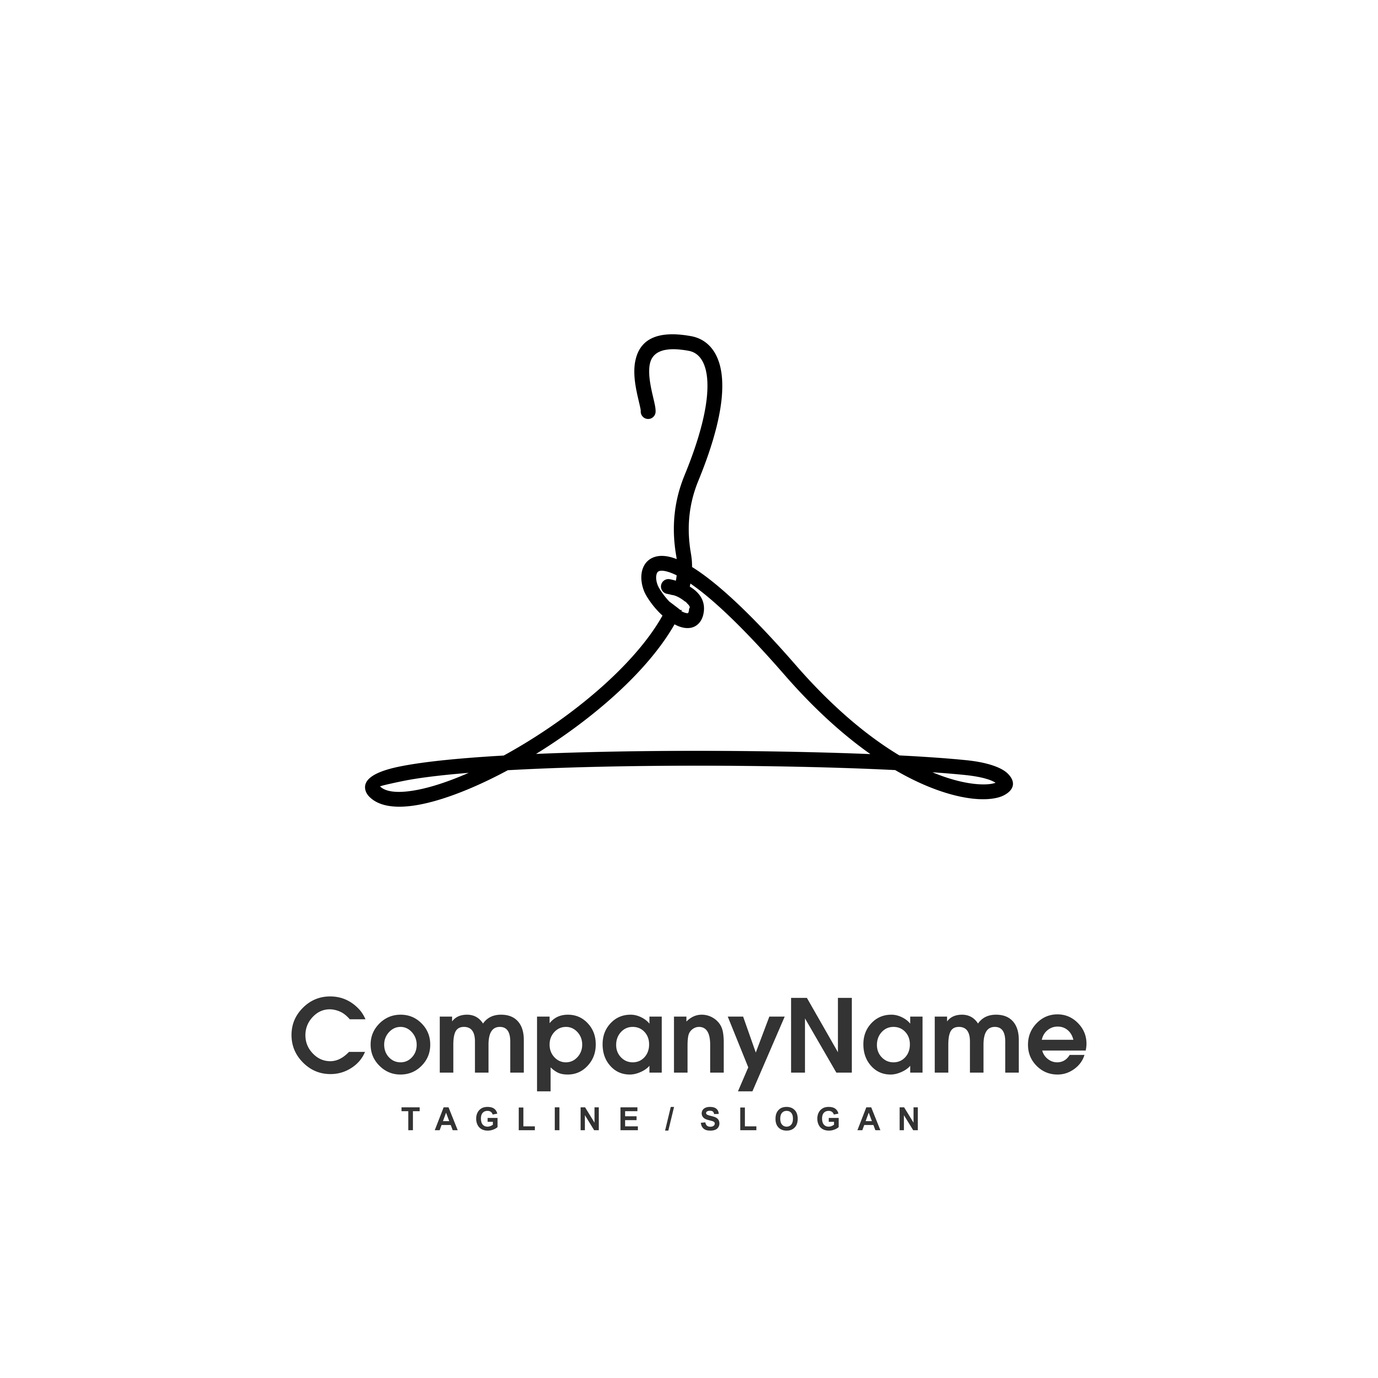 Logos For Clothing Line - Best Design Idea